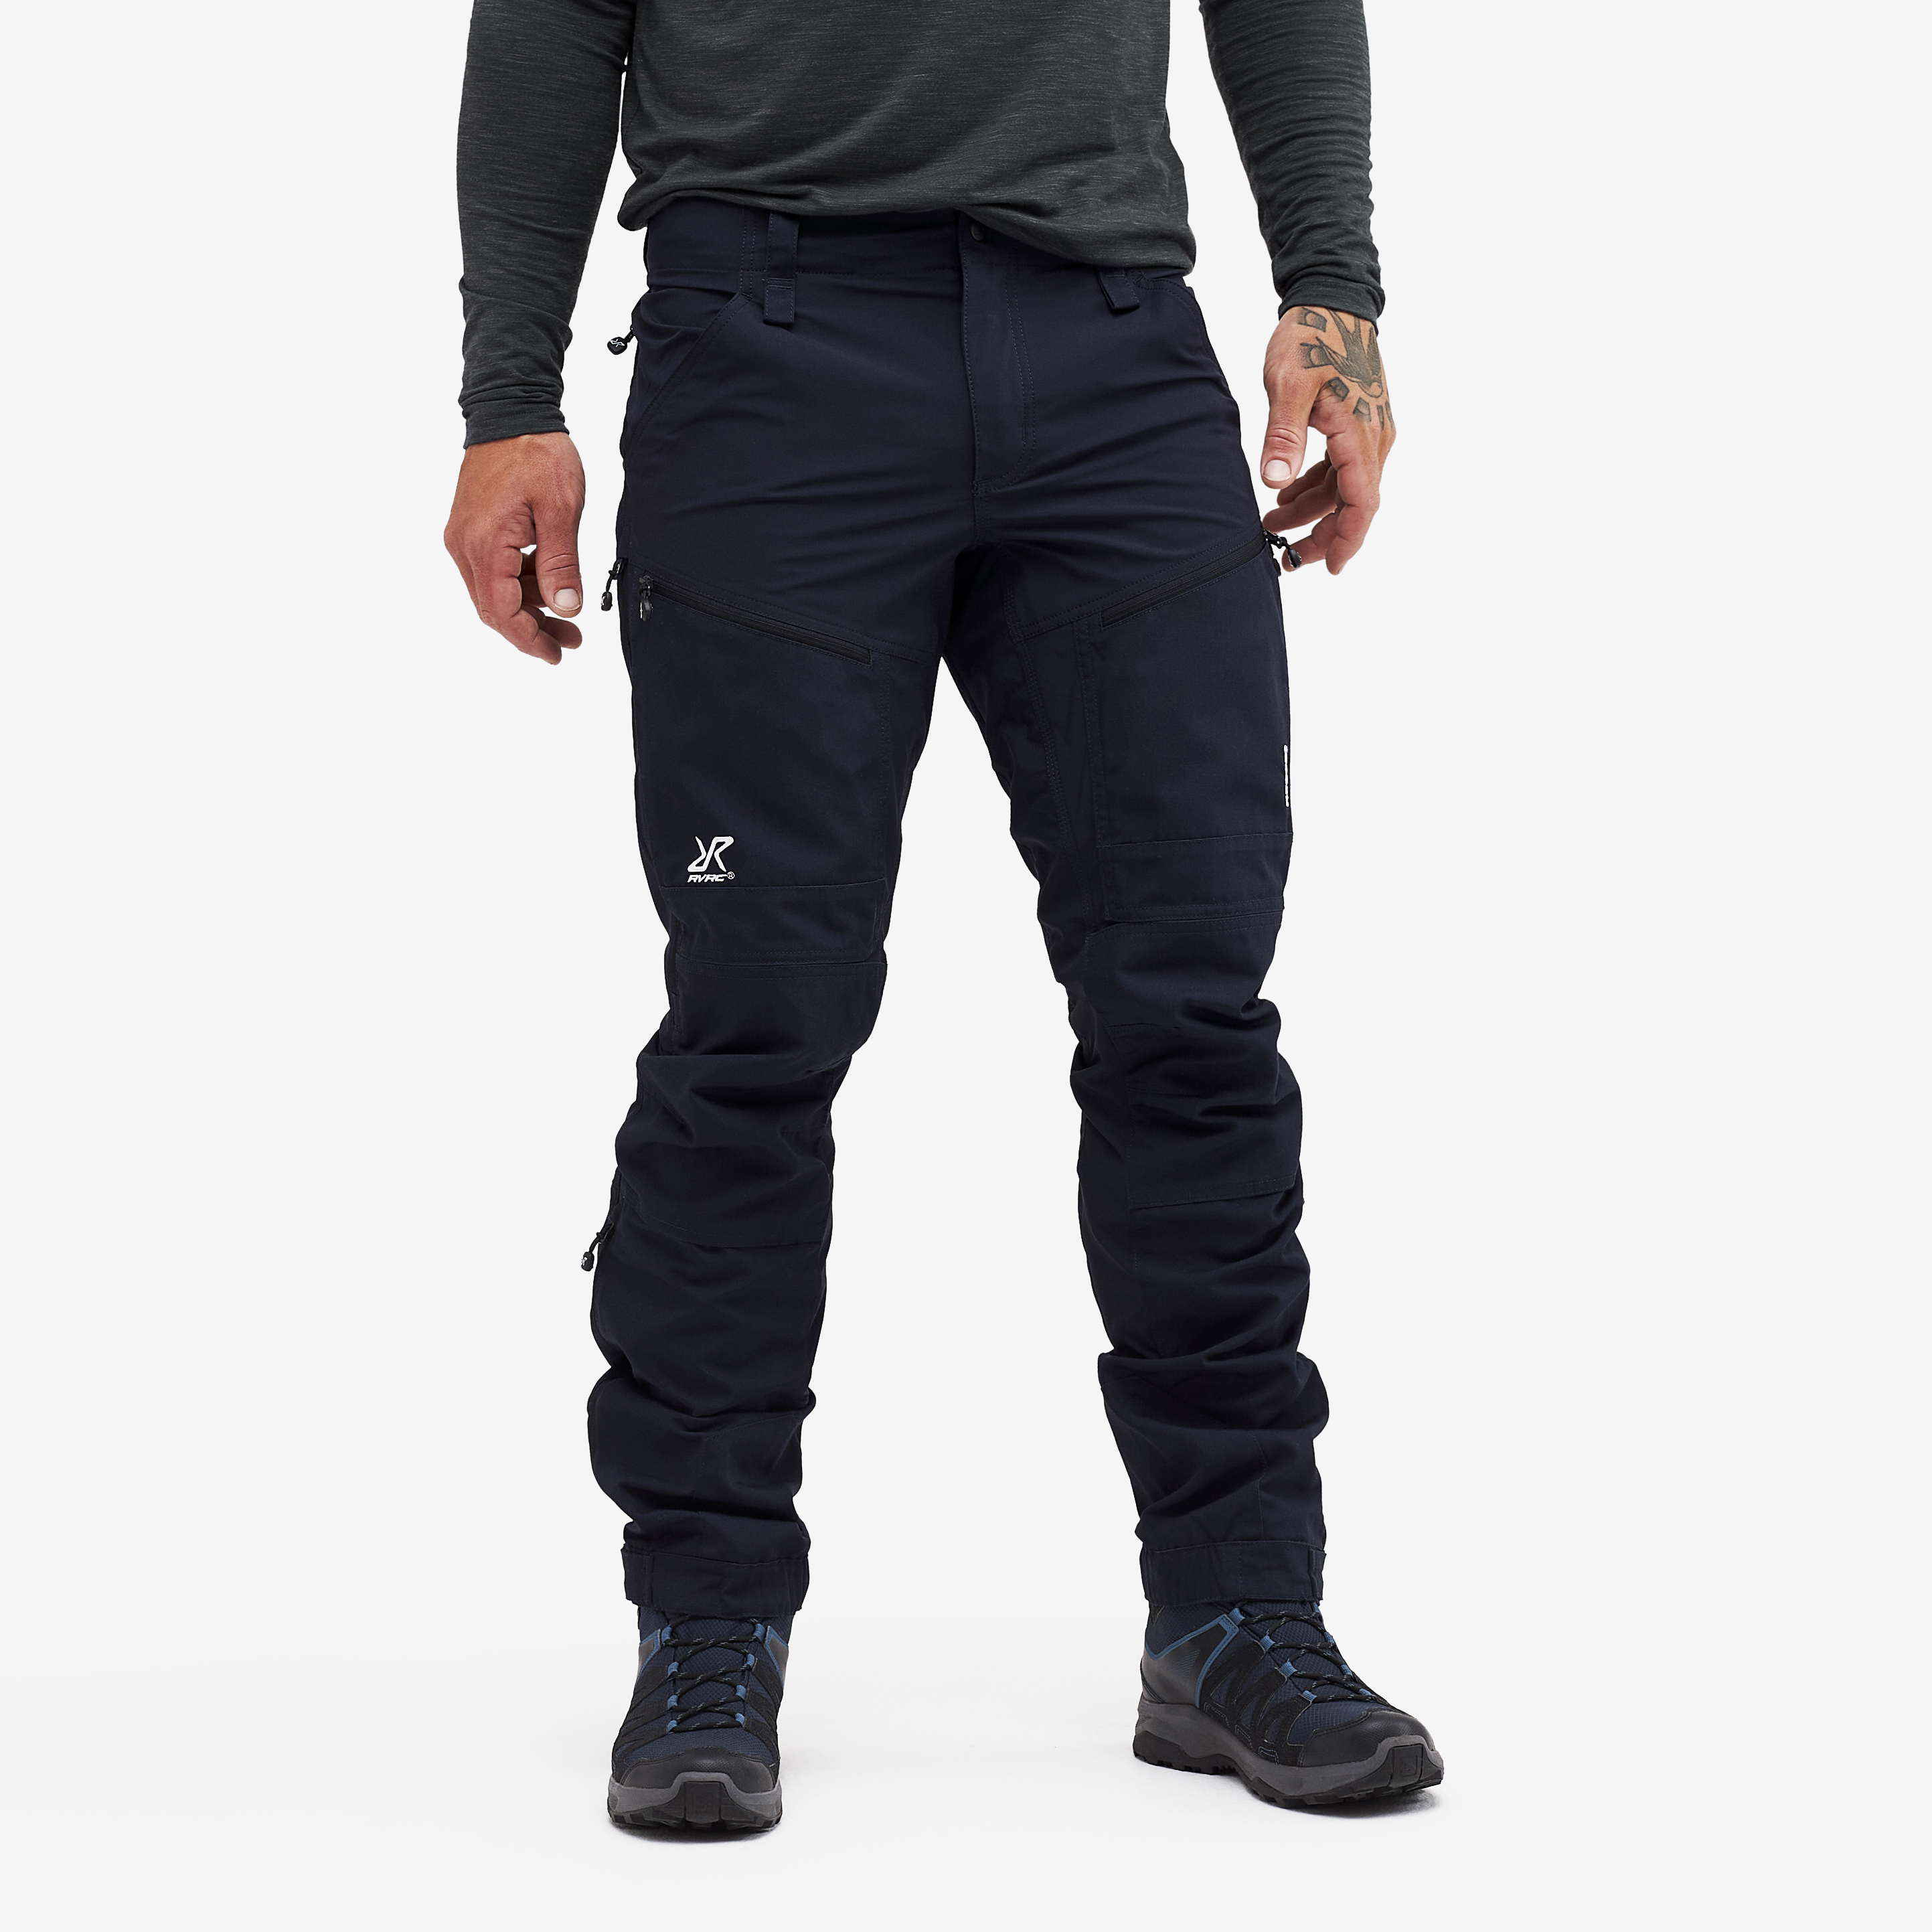 RVRC GP Pro Rescue hiking trousers for men in dark blue